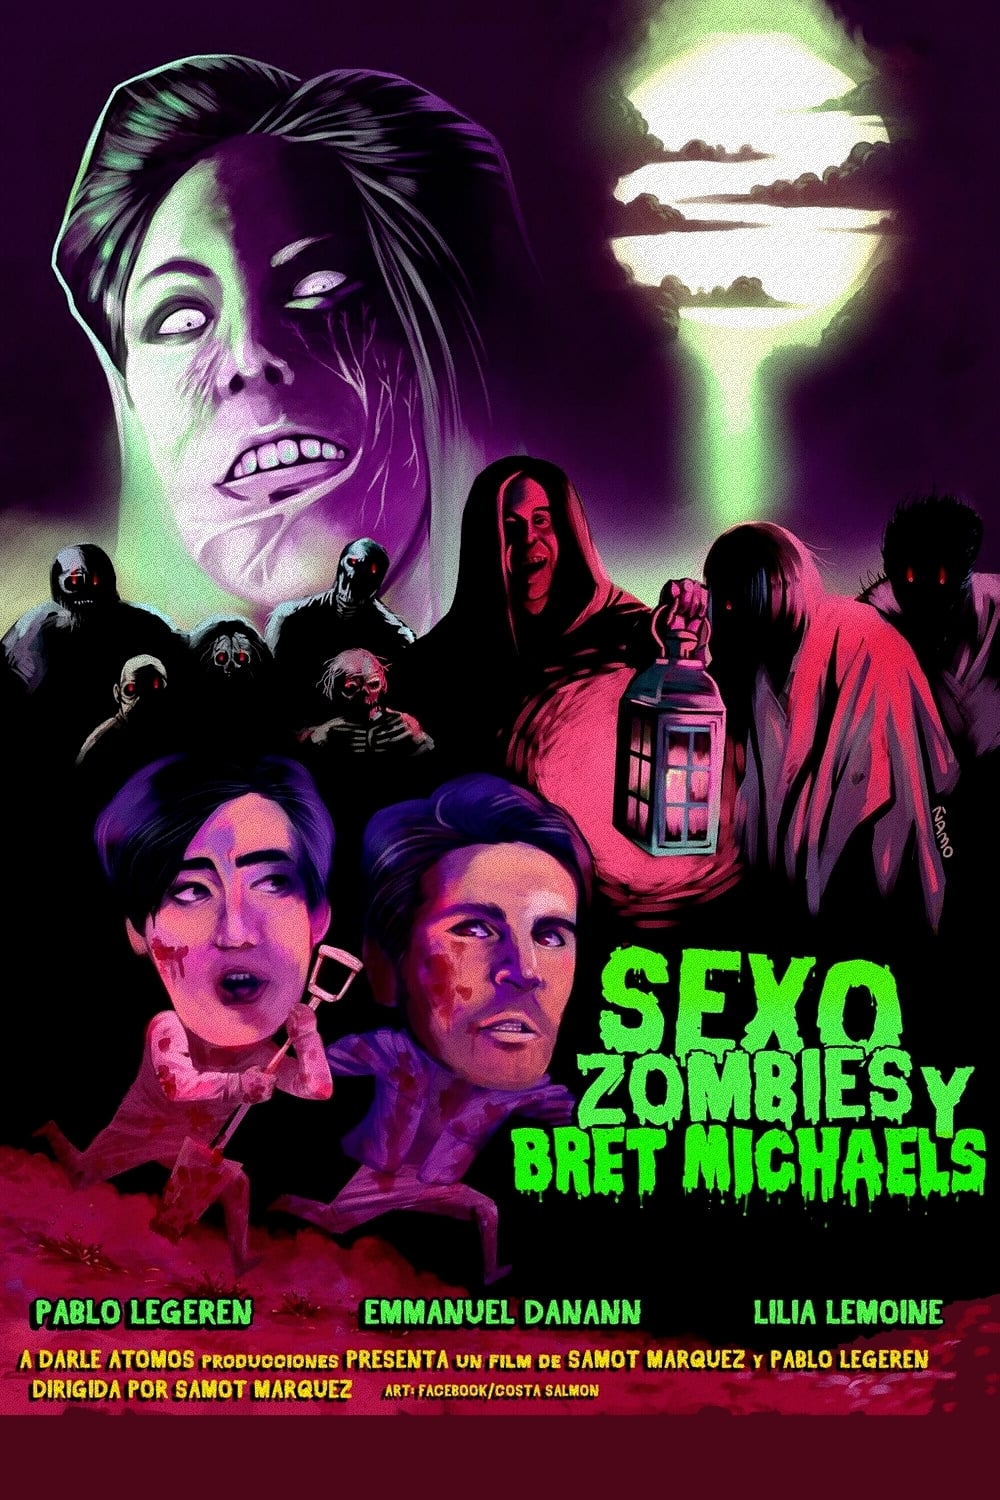 Sexo, zombies y Bret Michaels